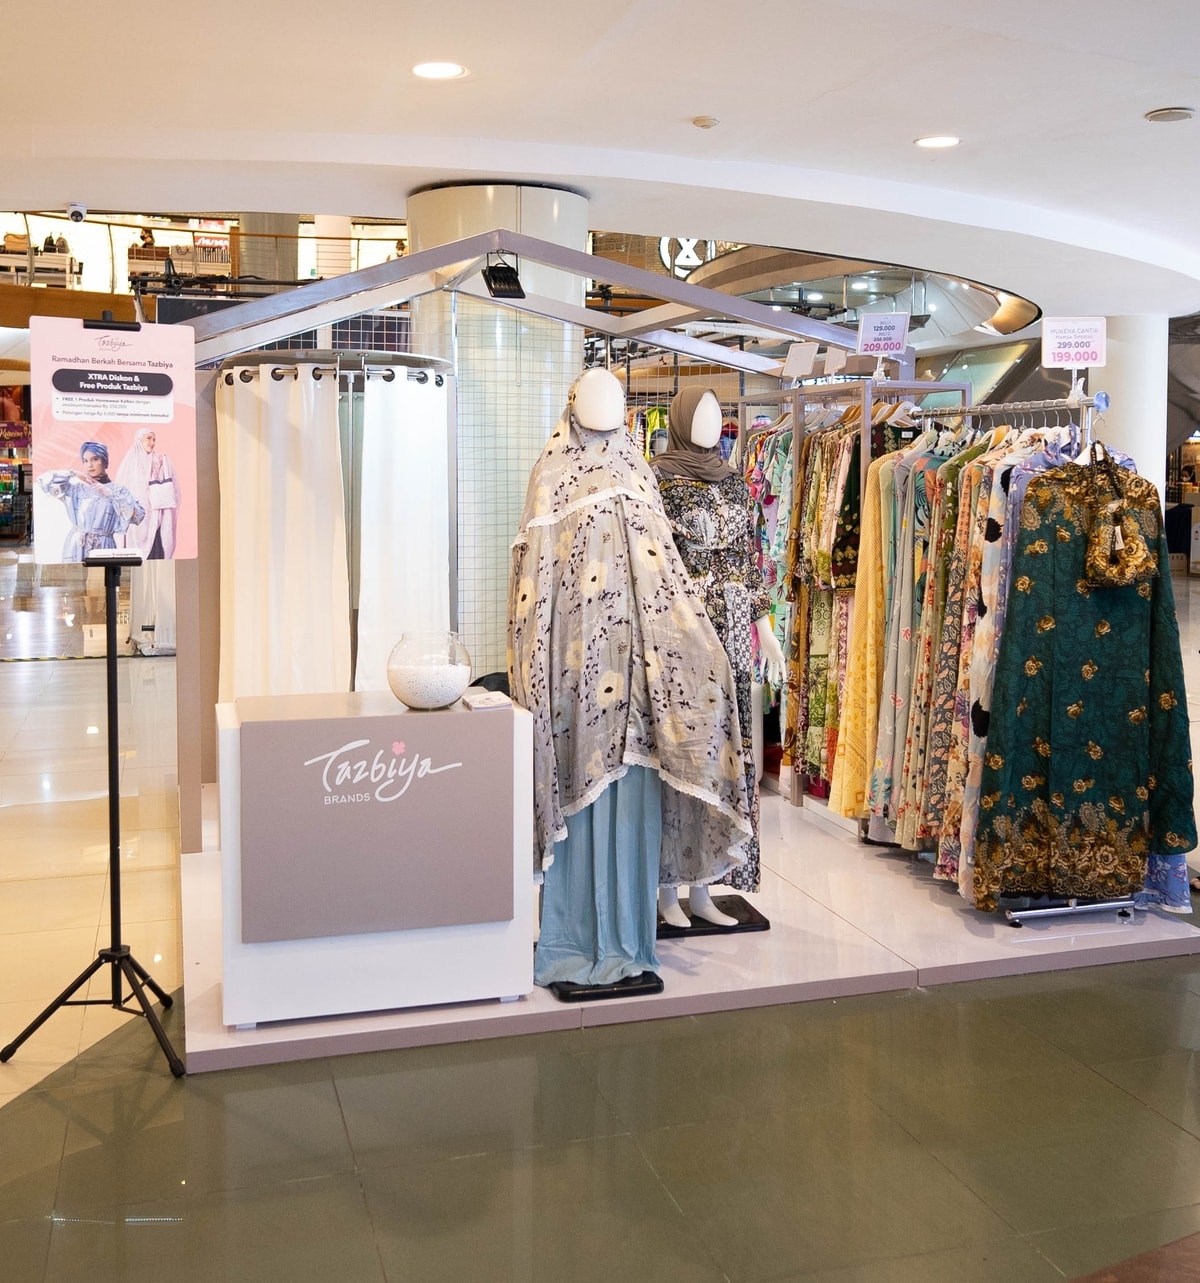 Booth Tazbiya Brands di Mall Kelapa Gading 2